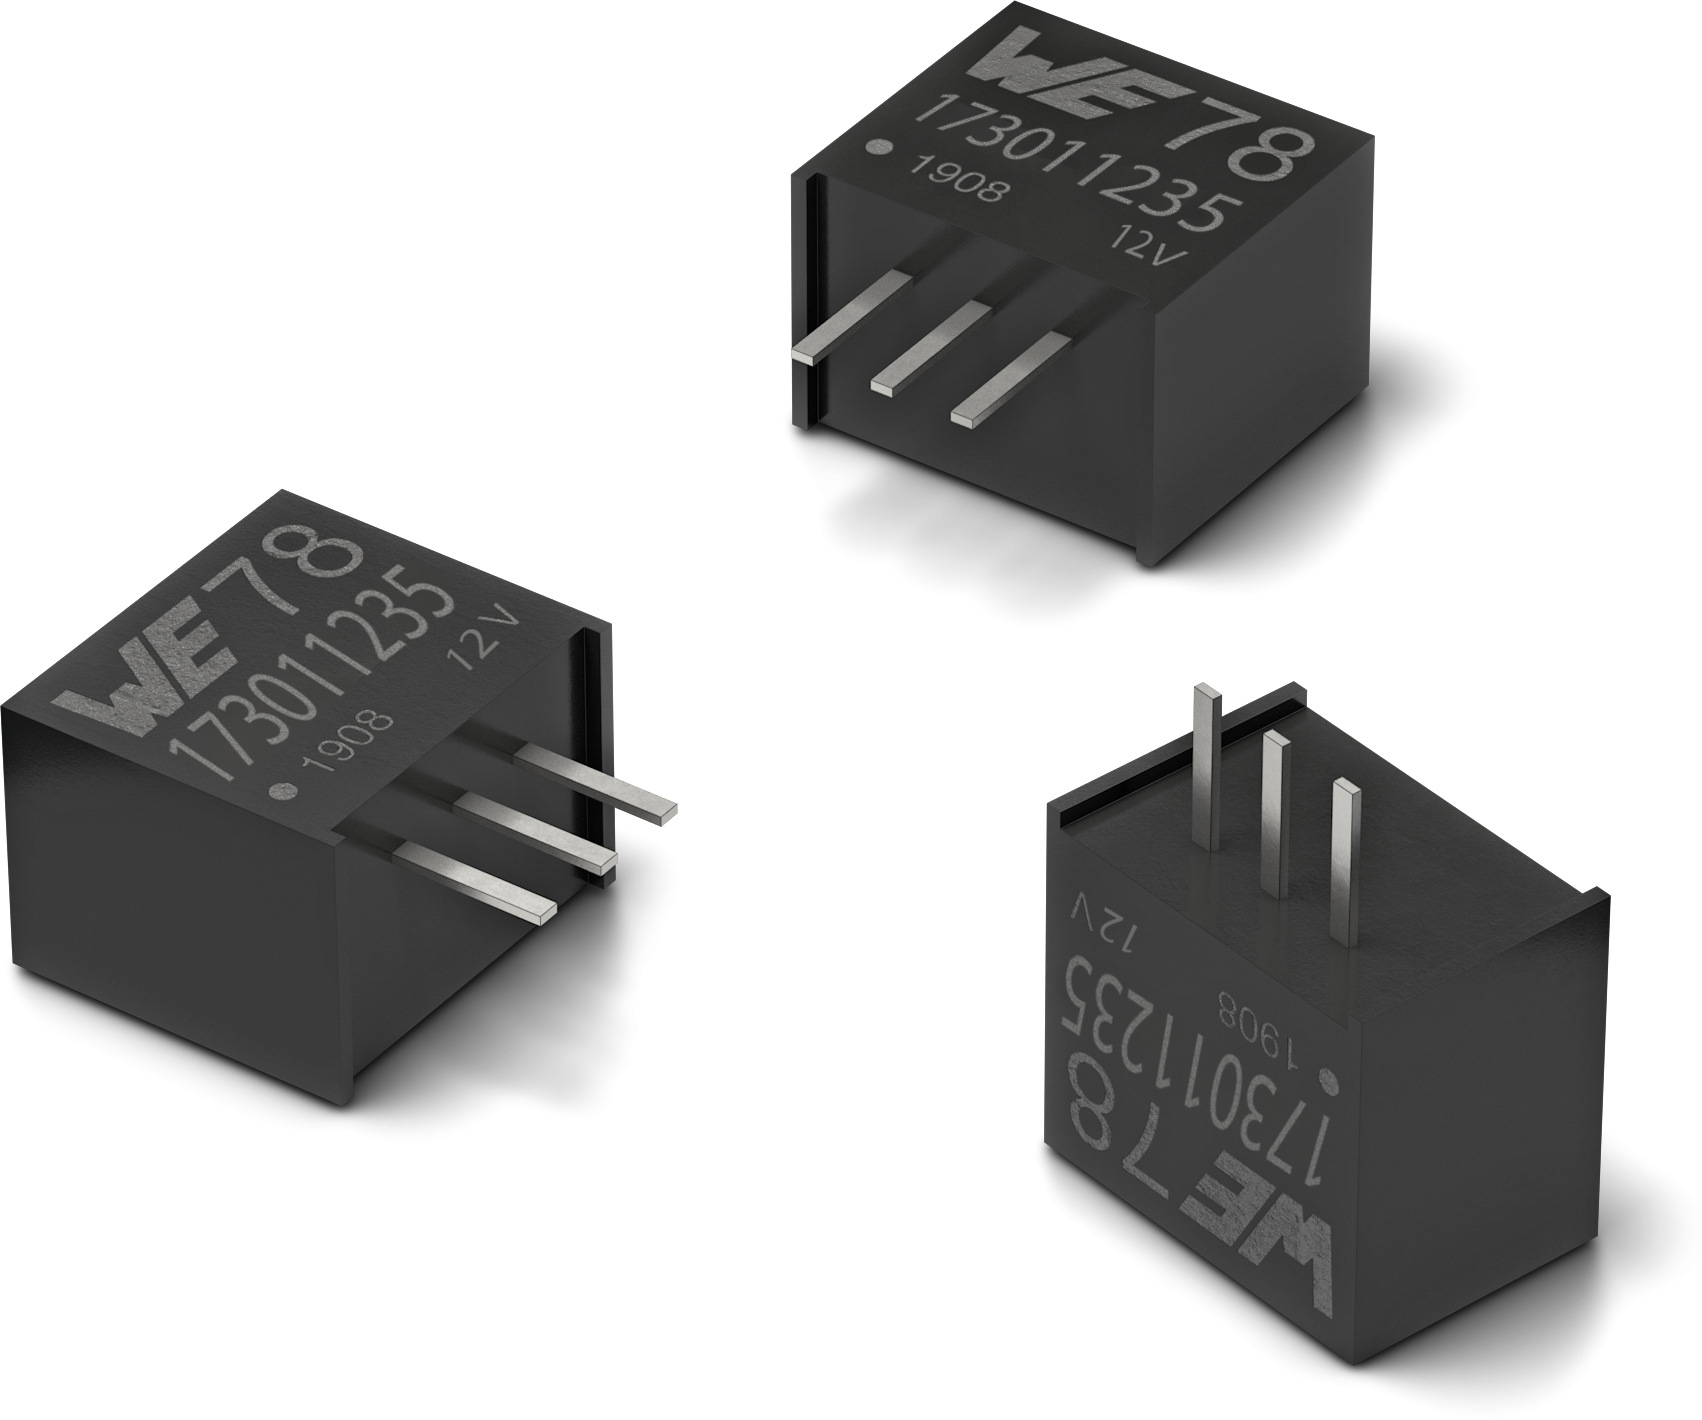 Würth Elektronik extends its MagI³C-FDSM-36-V family with a 12 V output voltage version